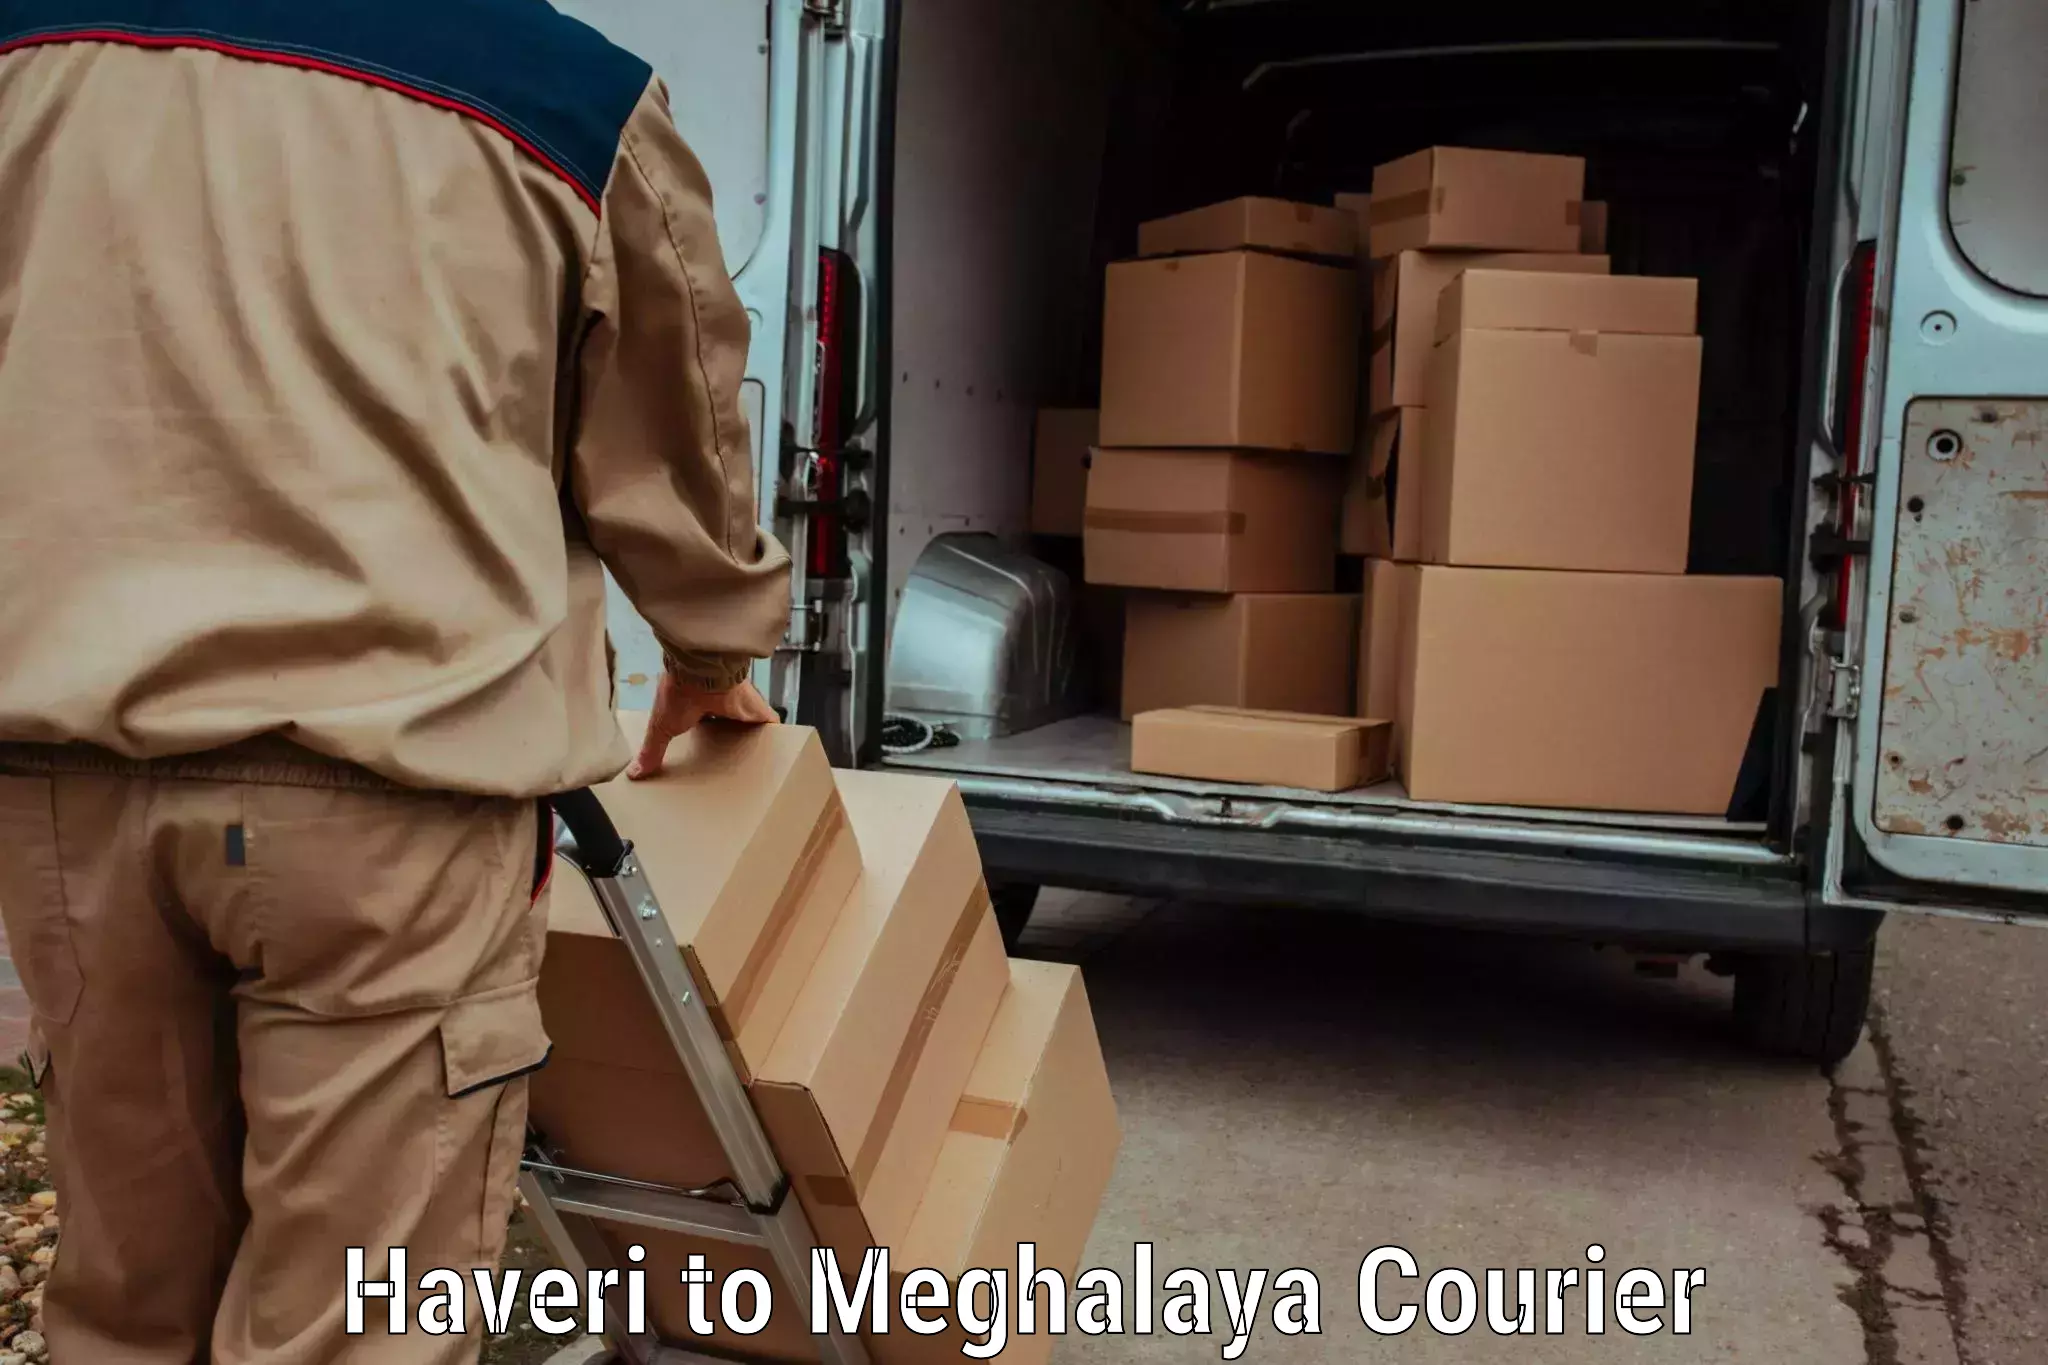 Luggage shipment specialists Haveri to Meghalaya